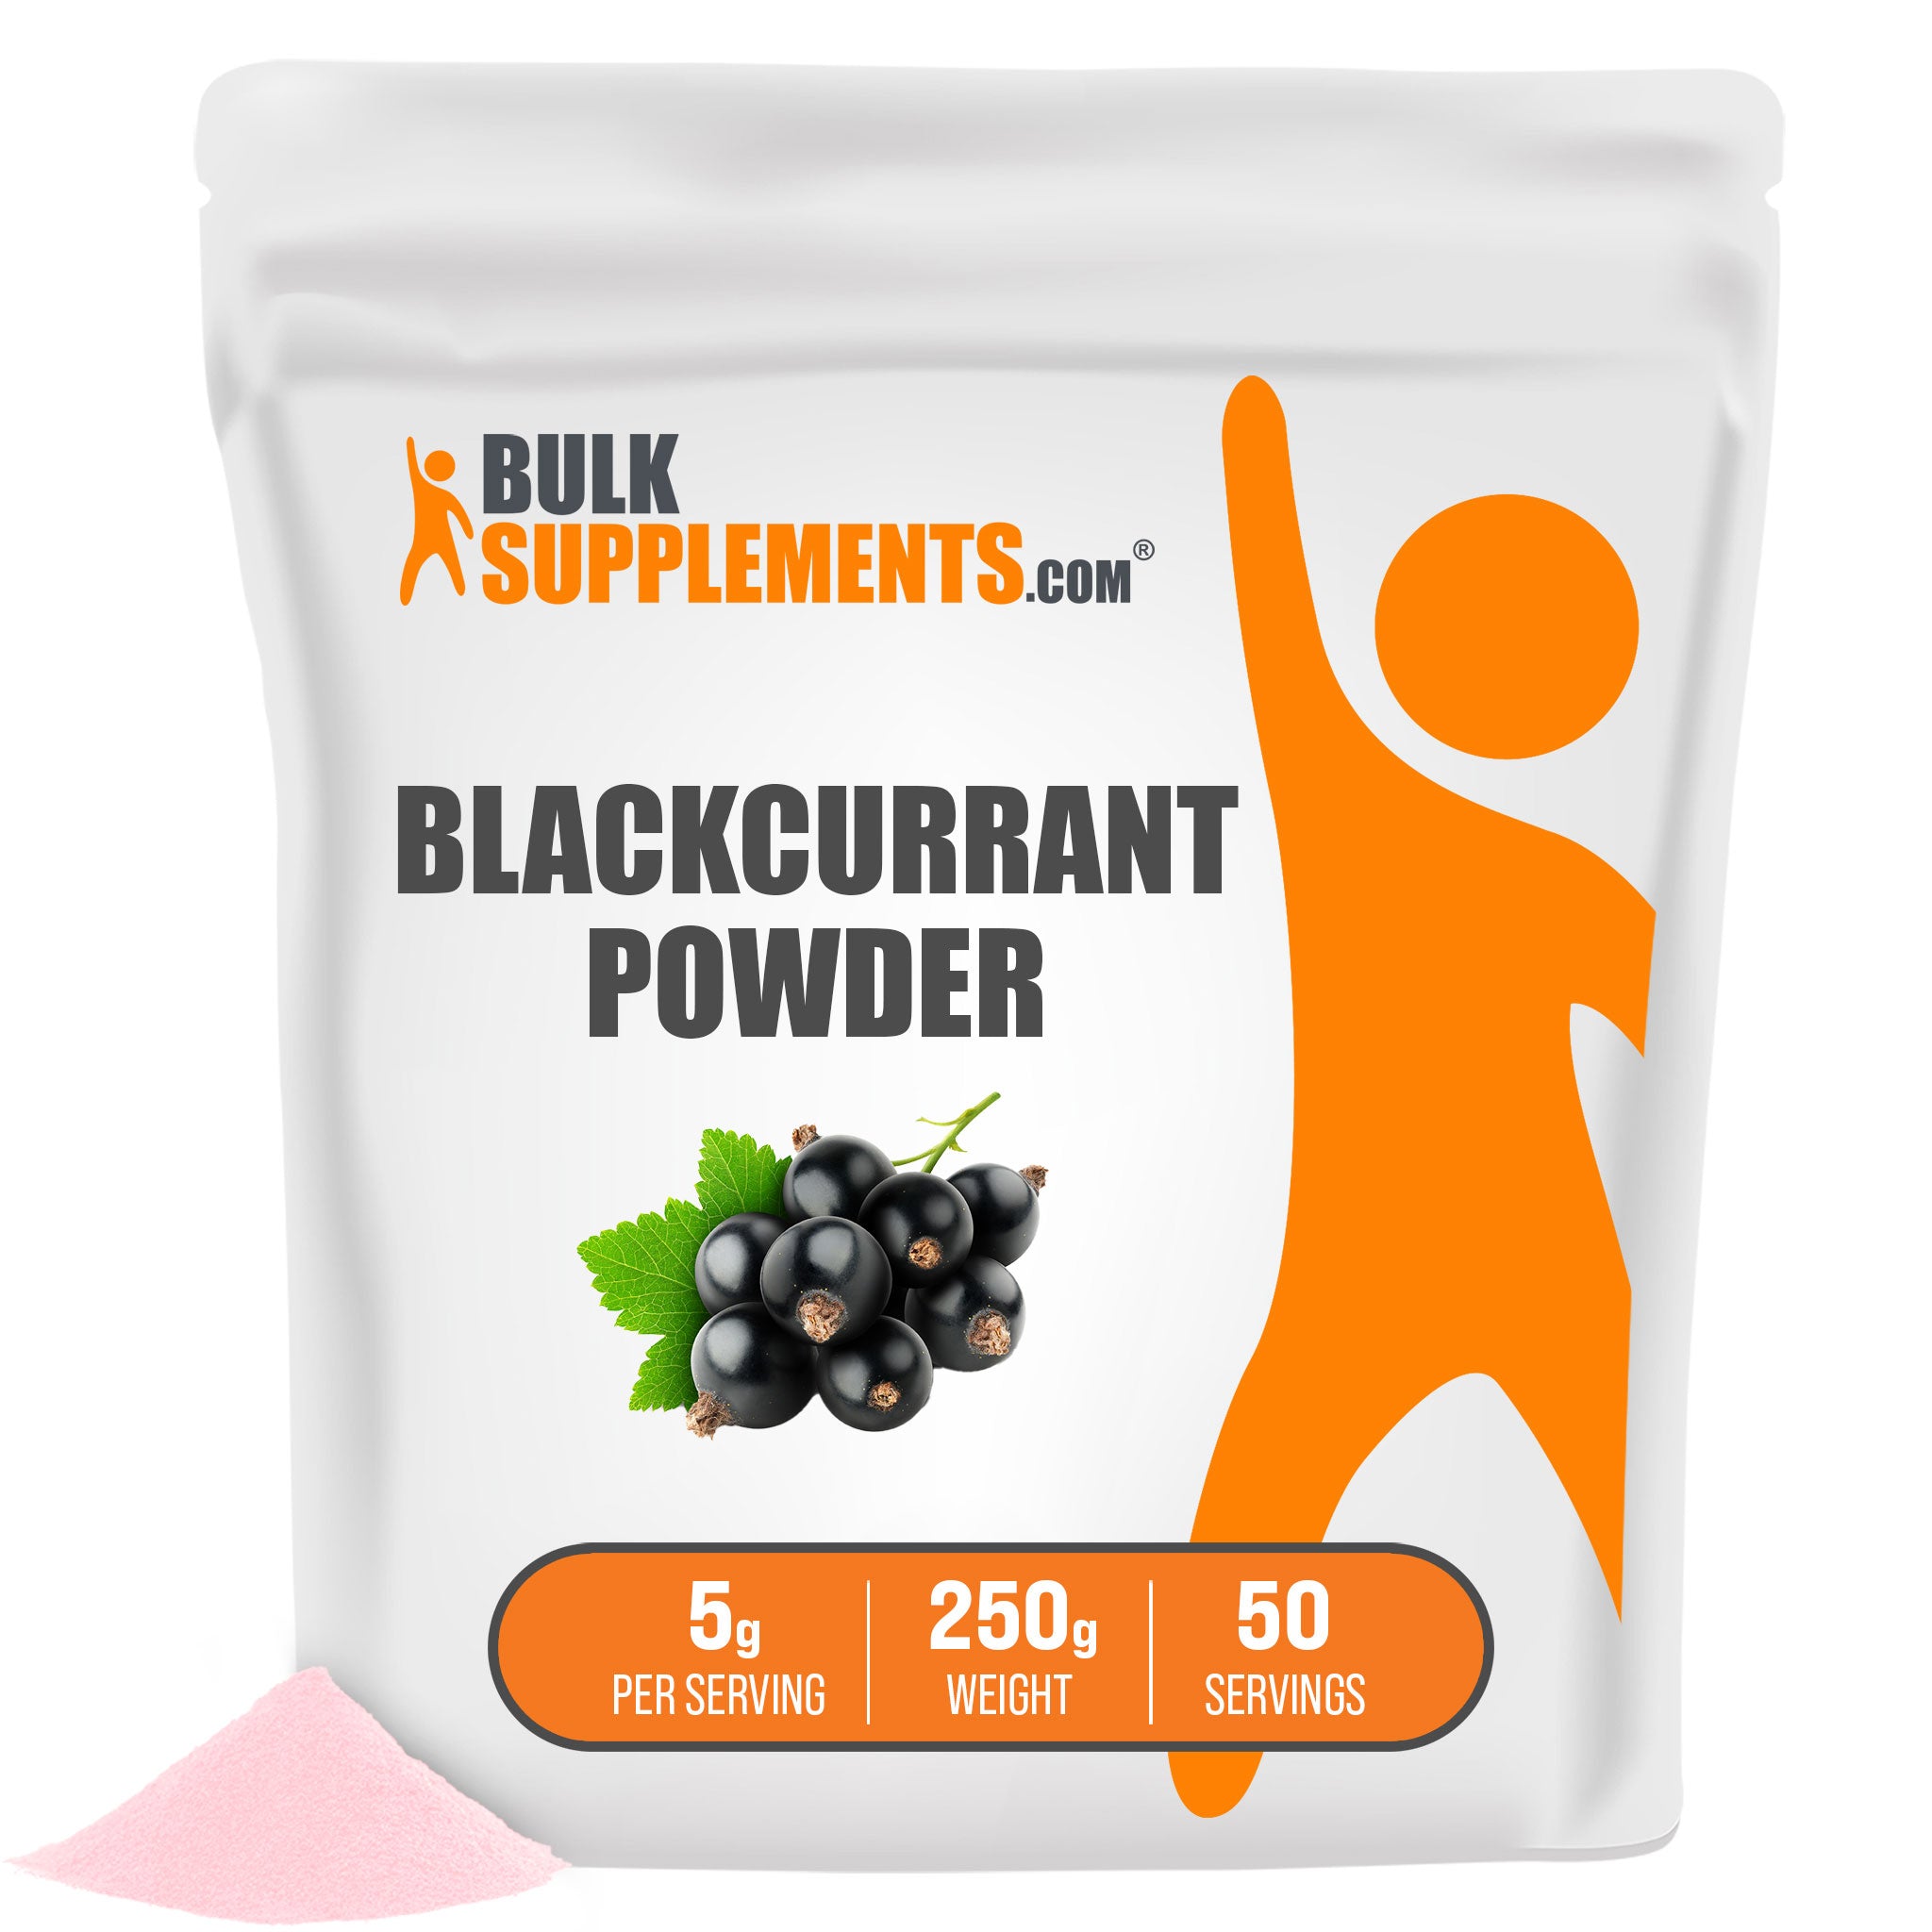 250g of Blackcurrant Powder